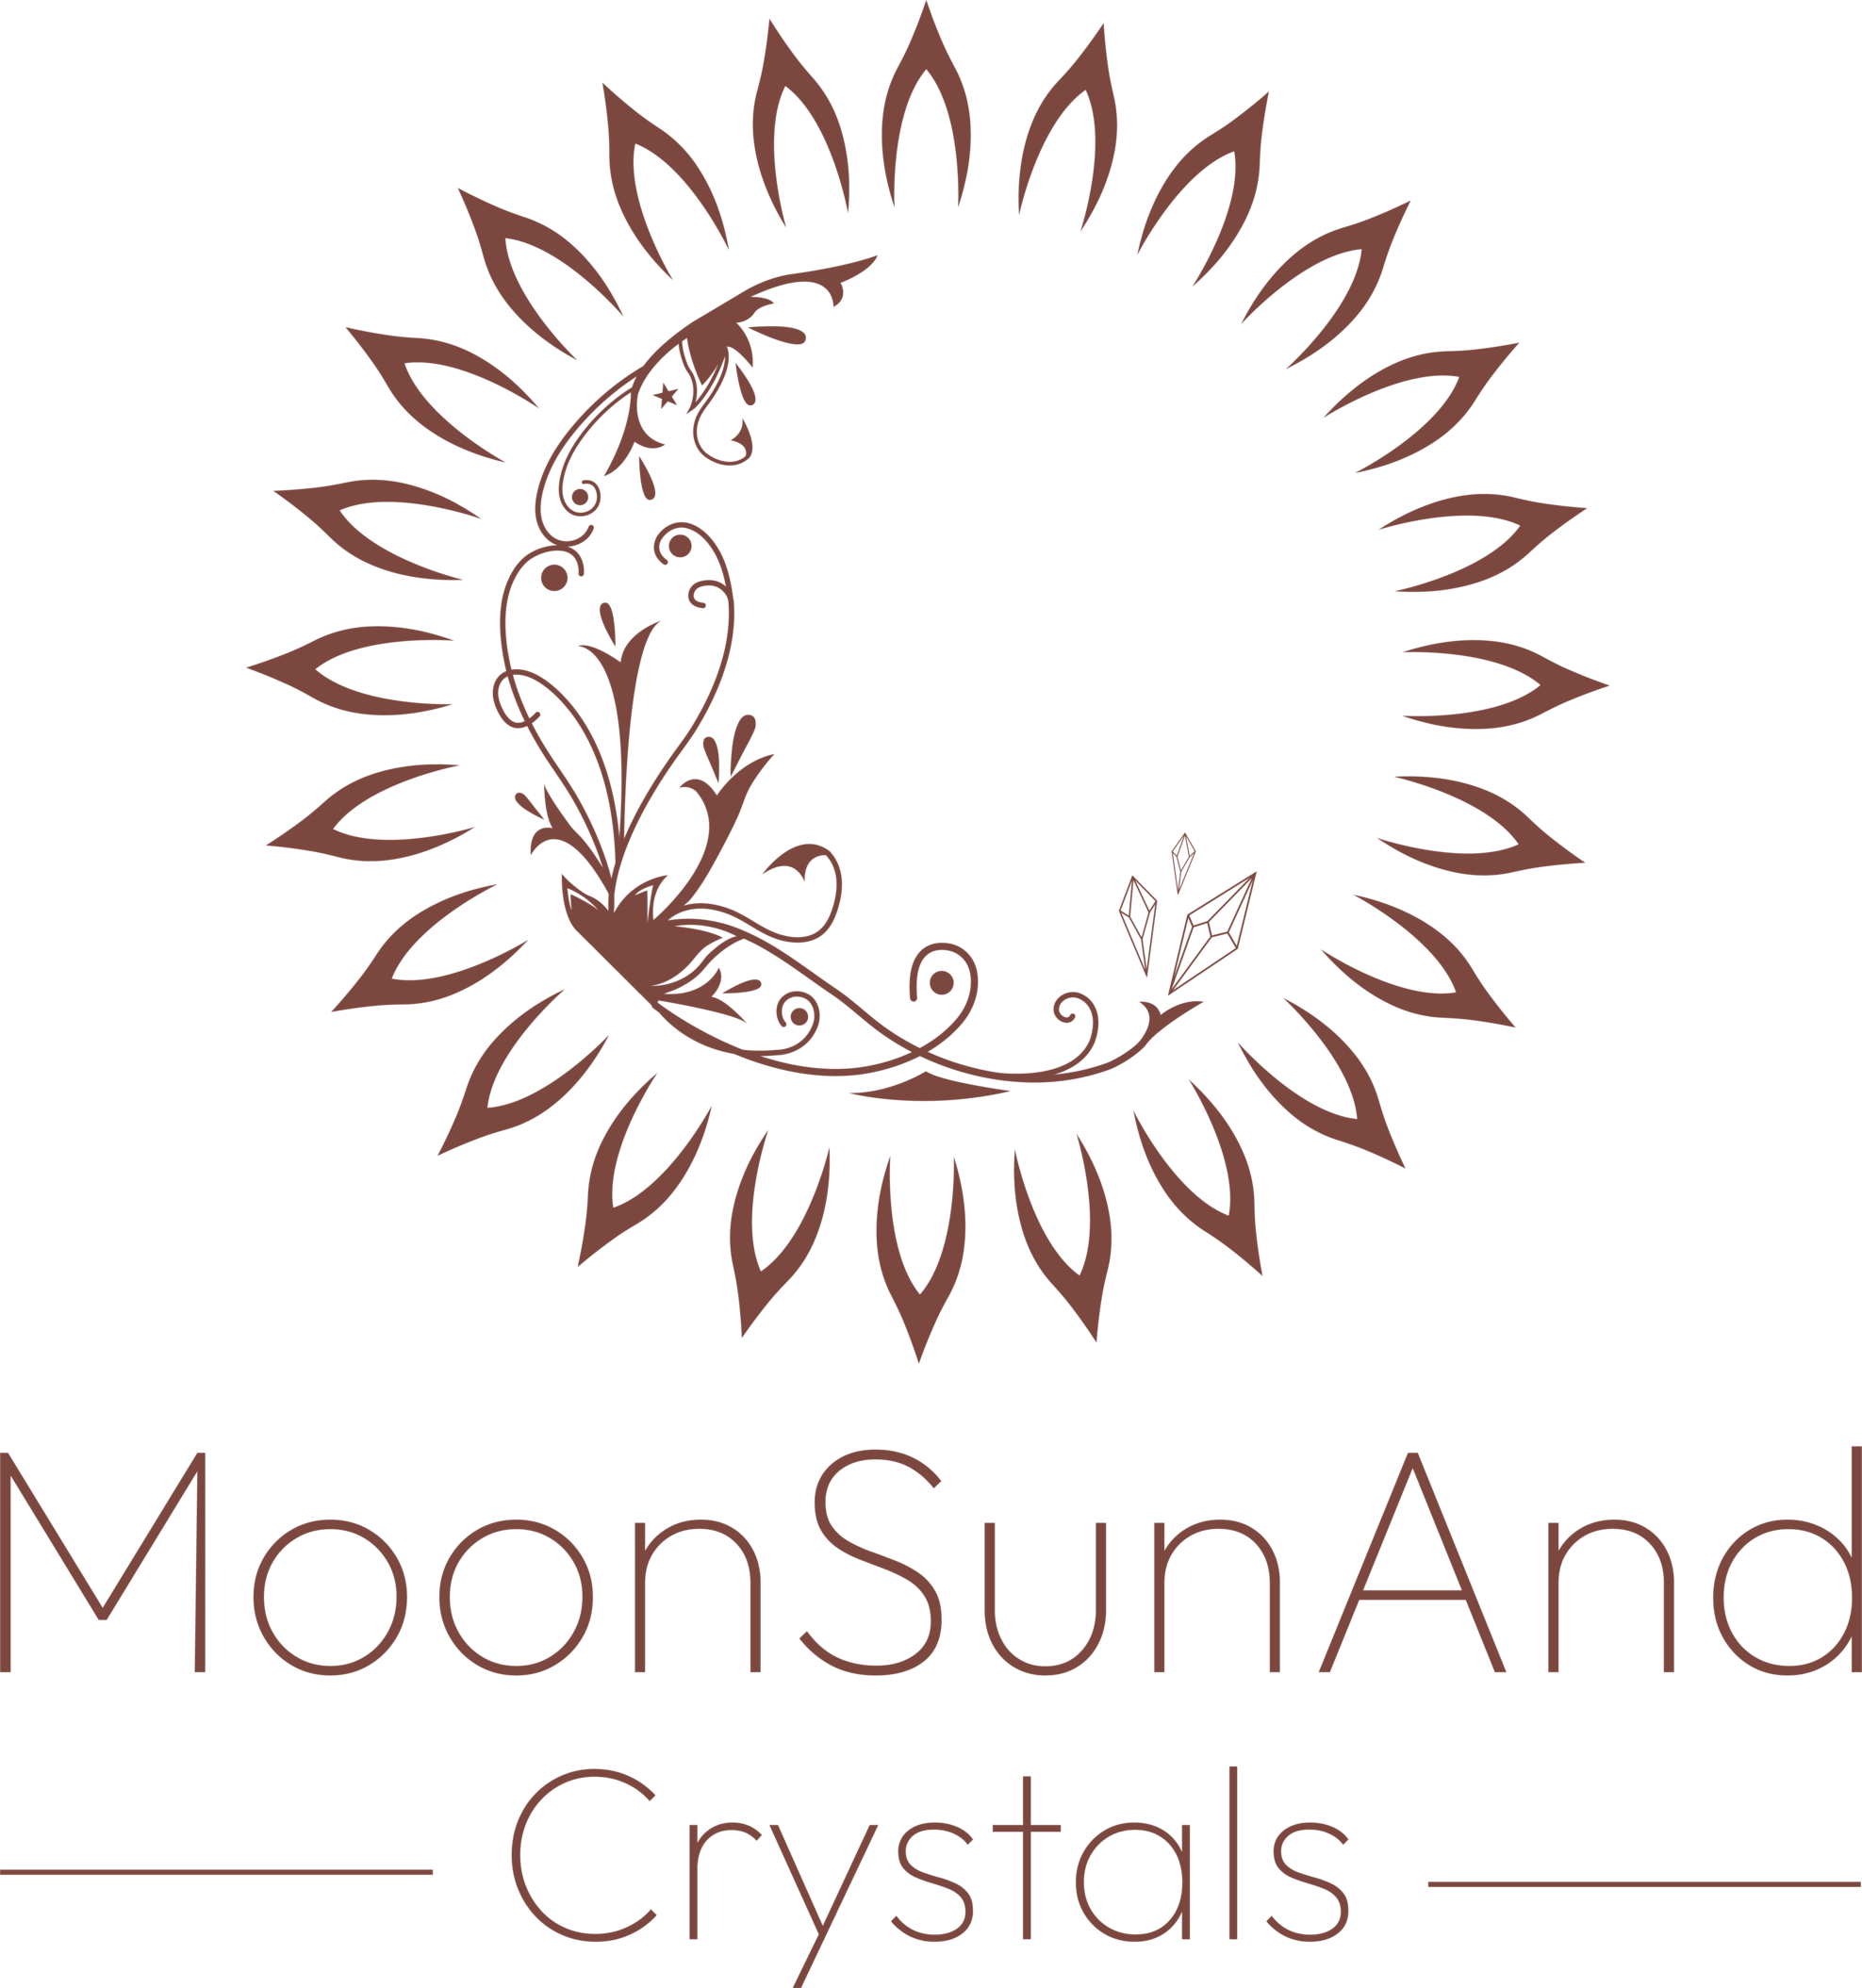 Moon Sun and Crystals